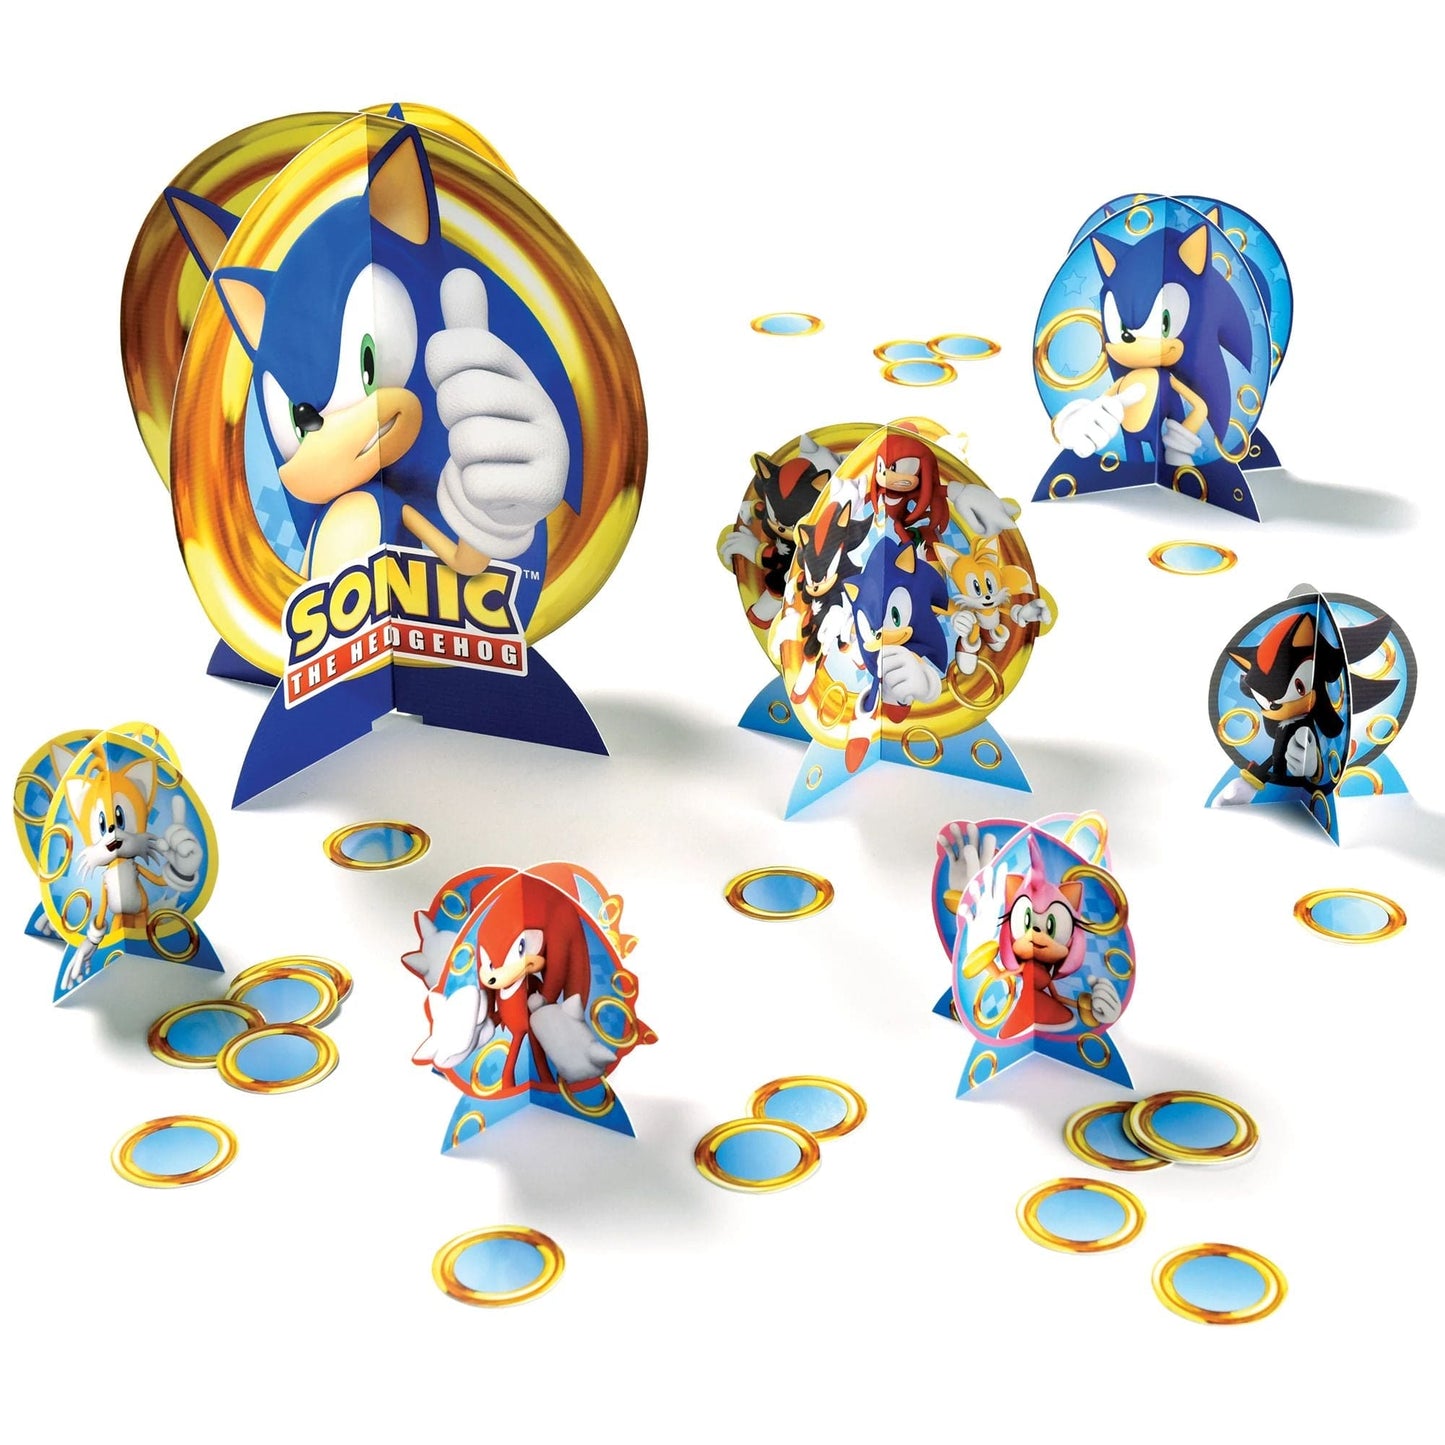 Sonic The Hedgehog Centerpiece Kit